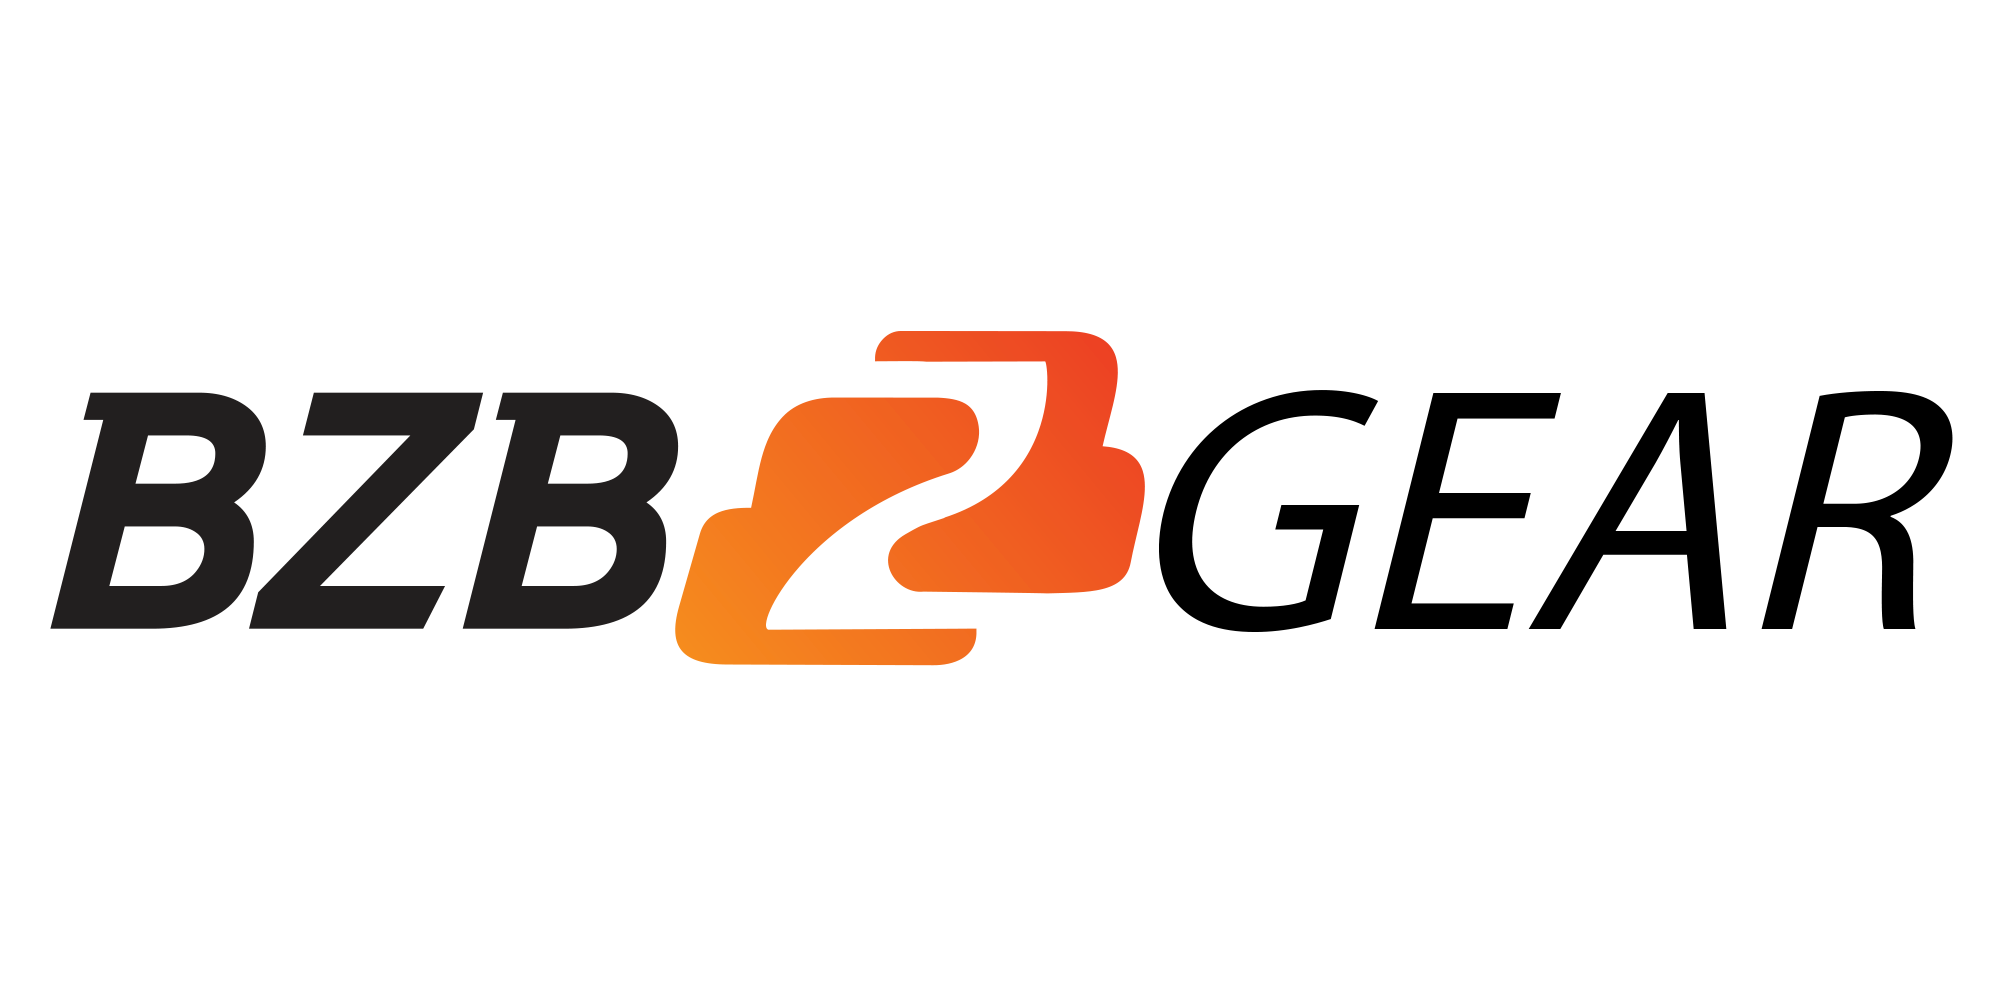 BZB Gear logo